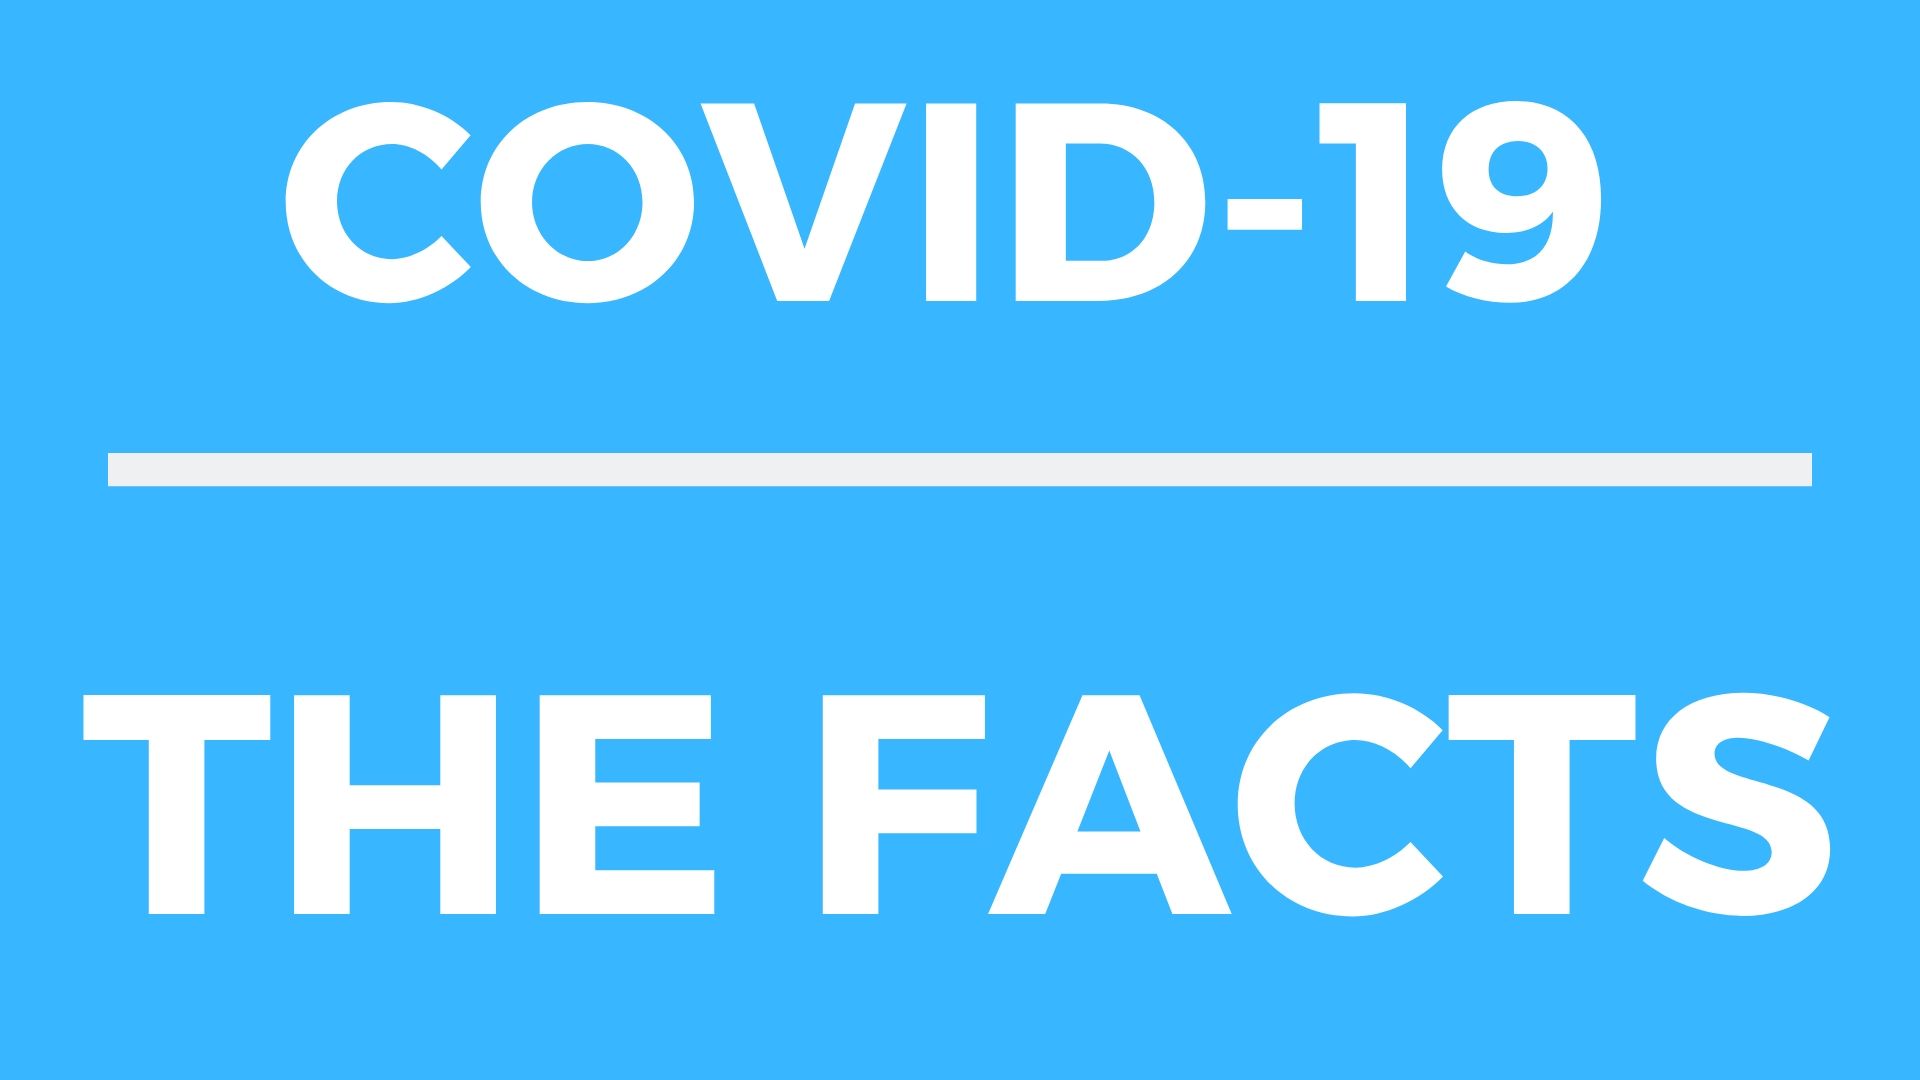 Covid facts